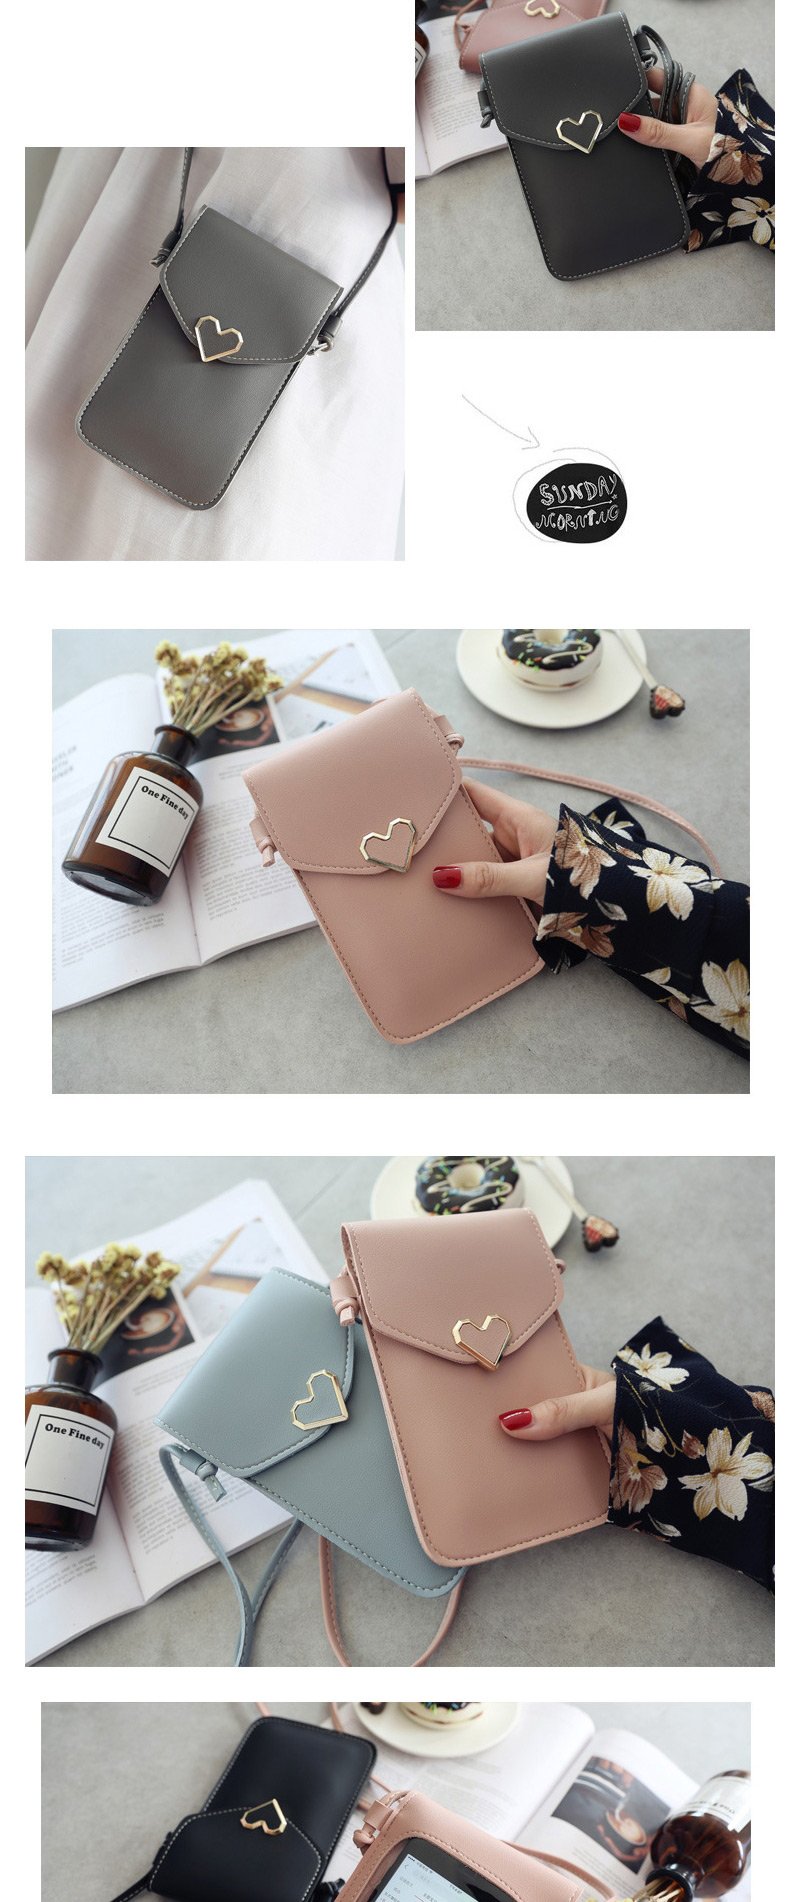 Fashion Dark Pink Caring Metal Transparent Touch Screen Multifunctional Mobile Phone Bag,Shoulder bags